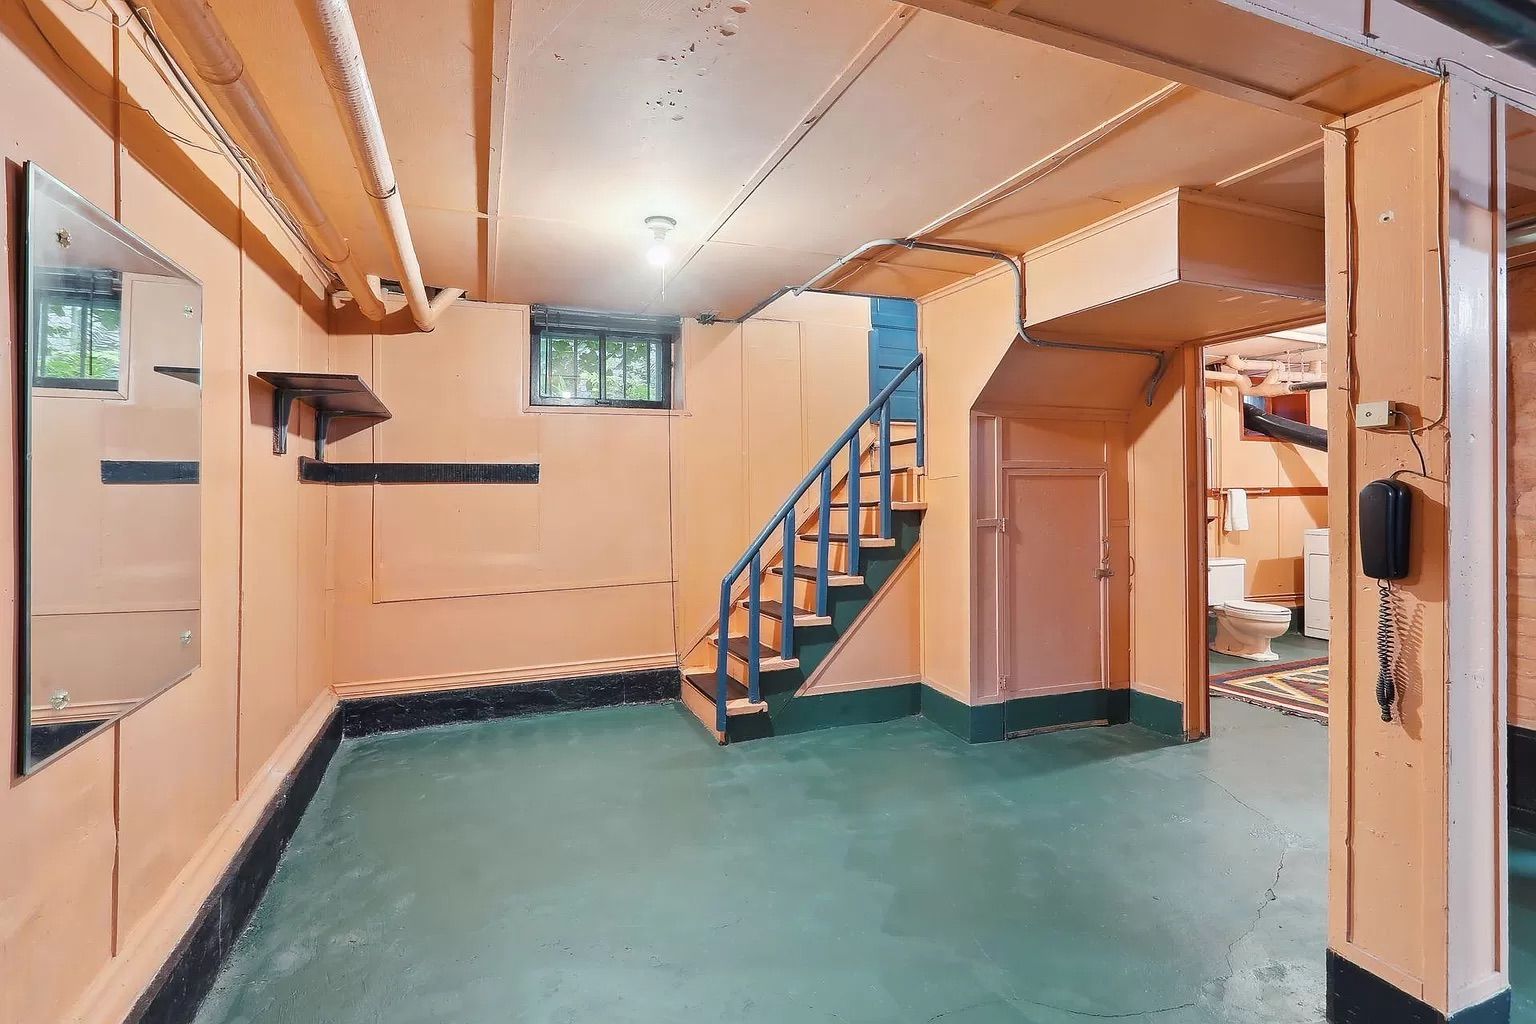 A photo of a peach-colored basement.